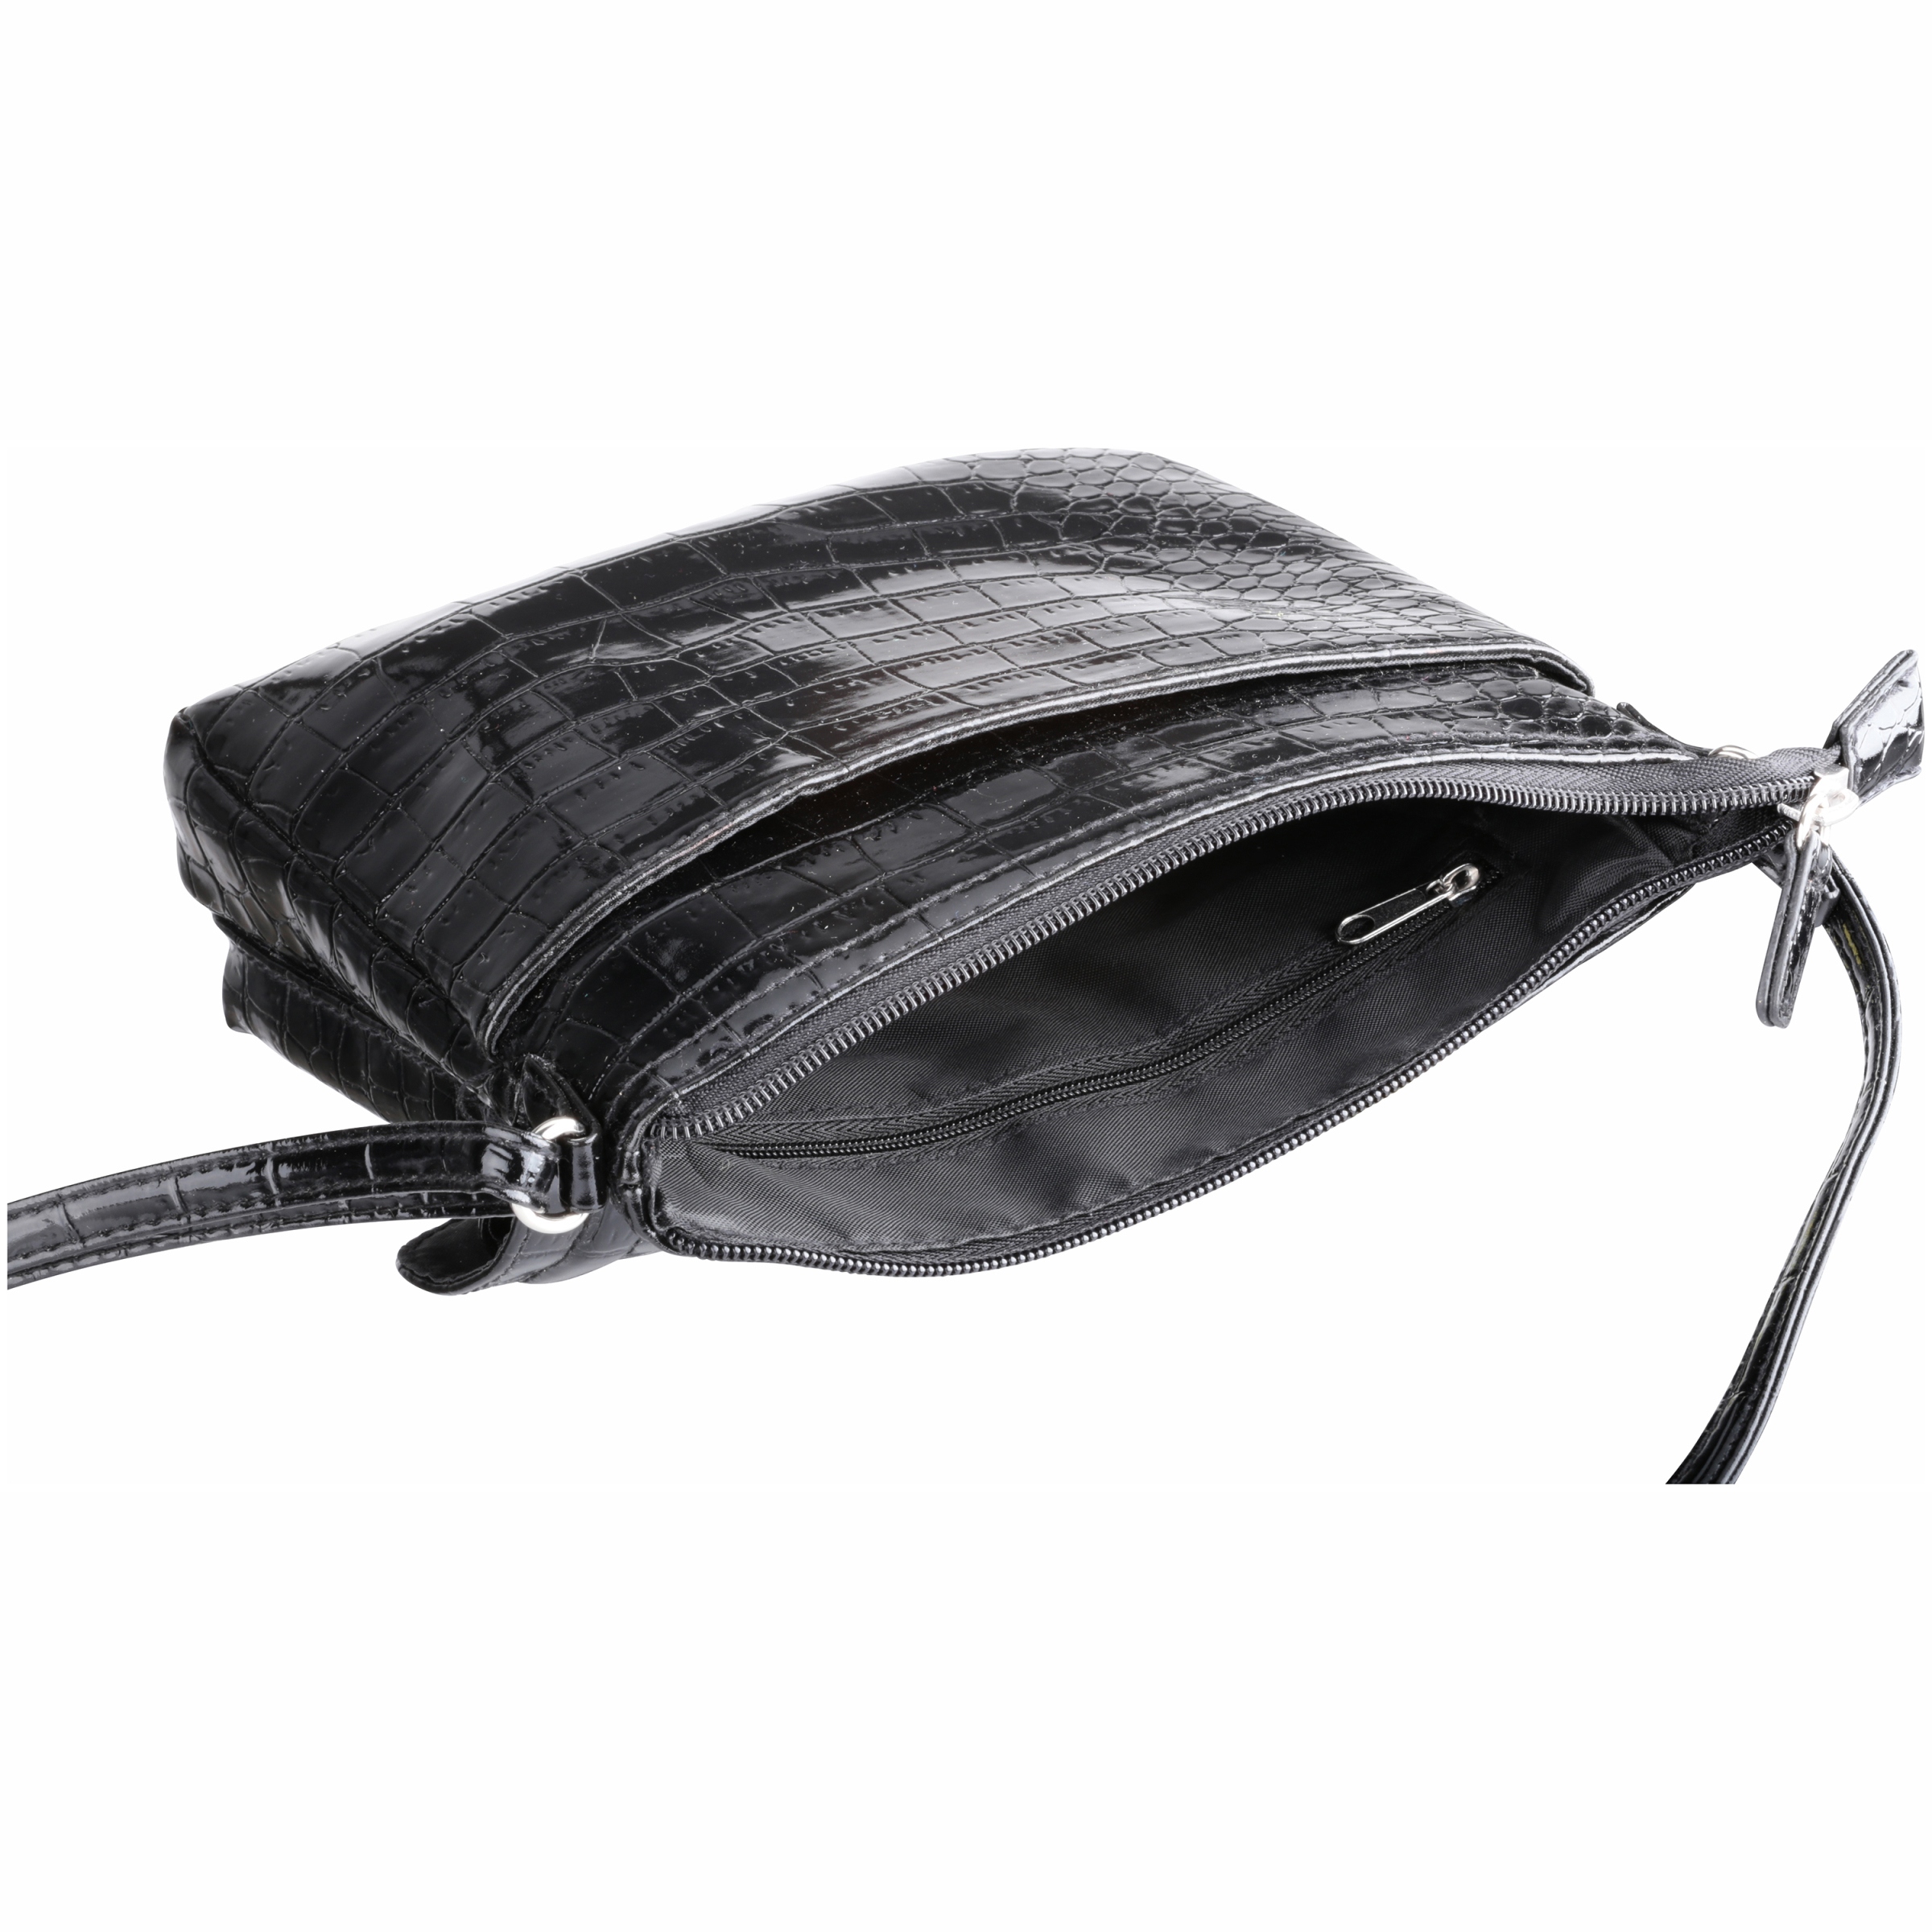 George® Shiny Black Handbag - image 4 of 5